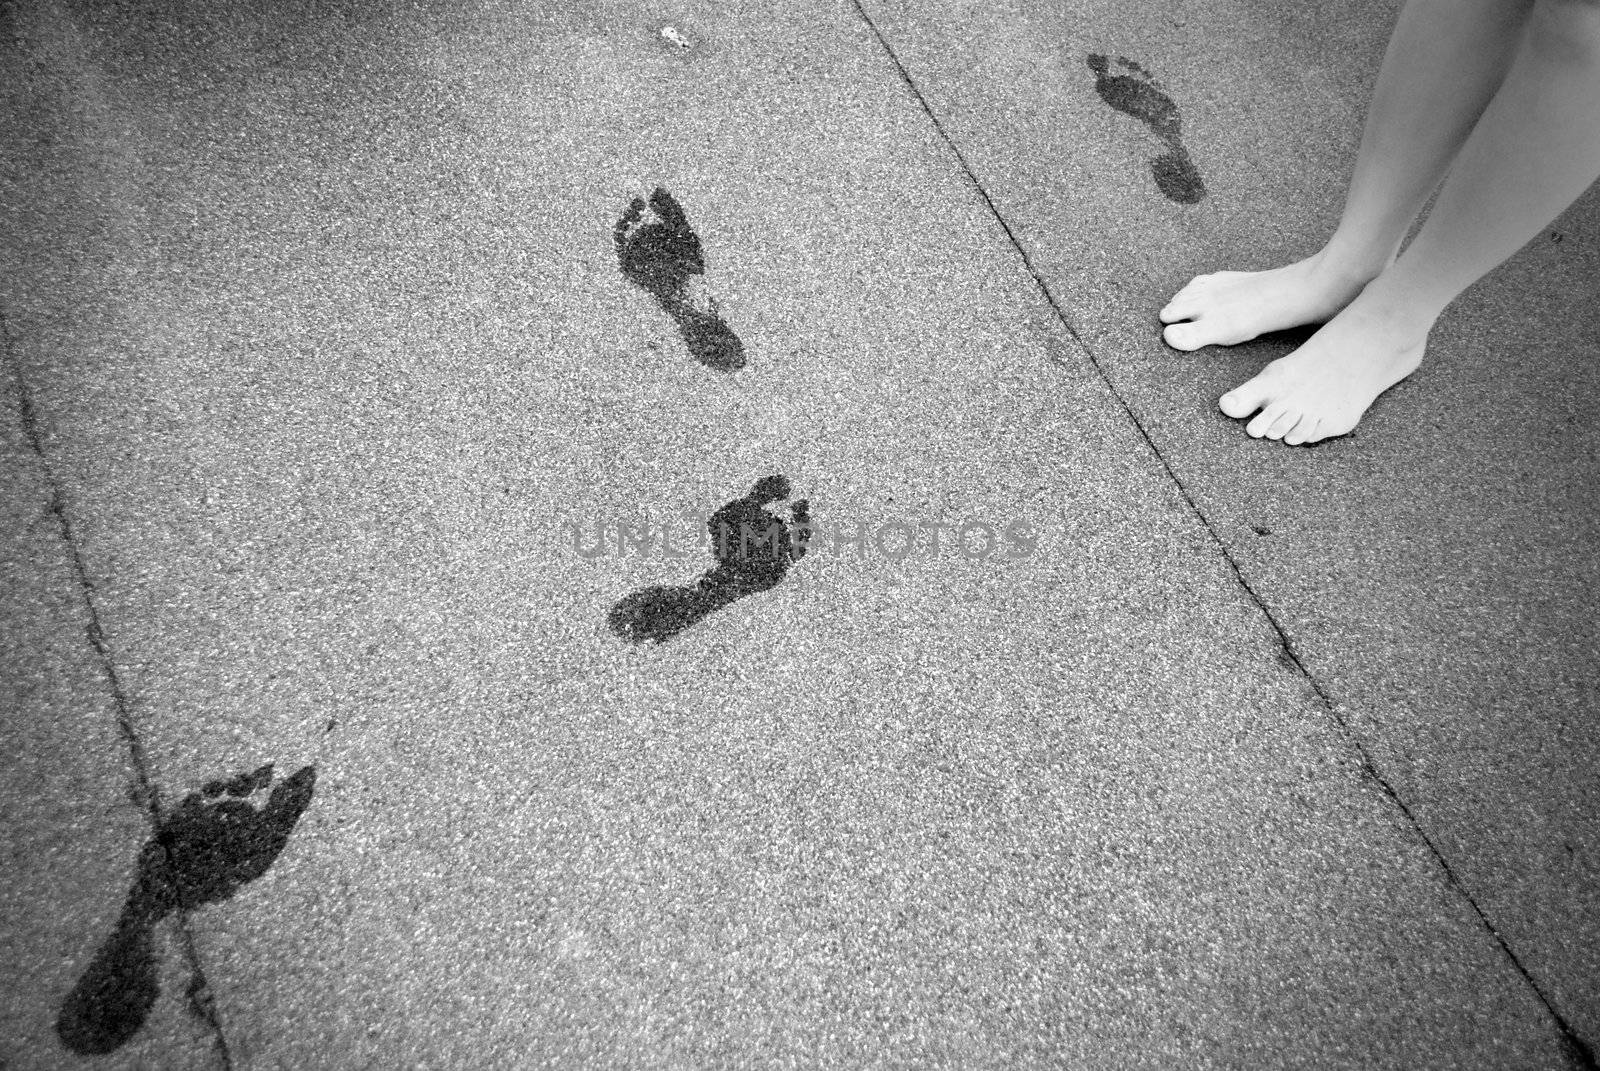 wet footprints after walking barefoot on the floor